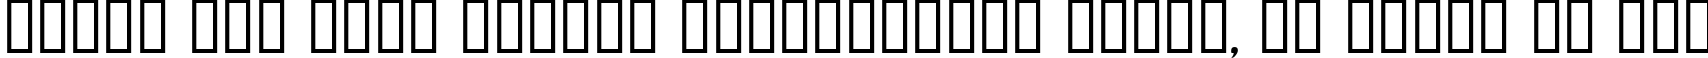 Пример написания шрифтом Dumbledor 3 текста на русском